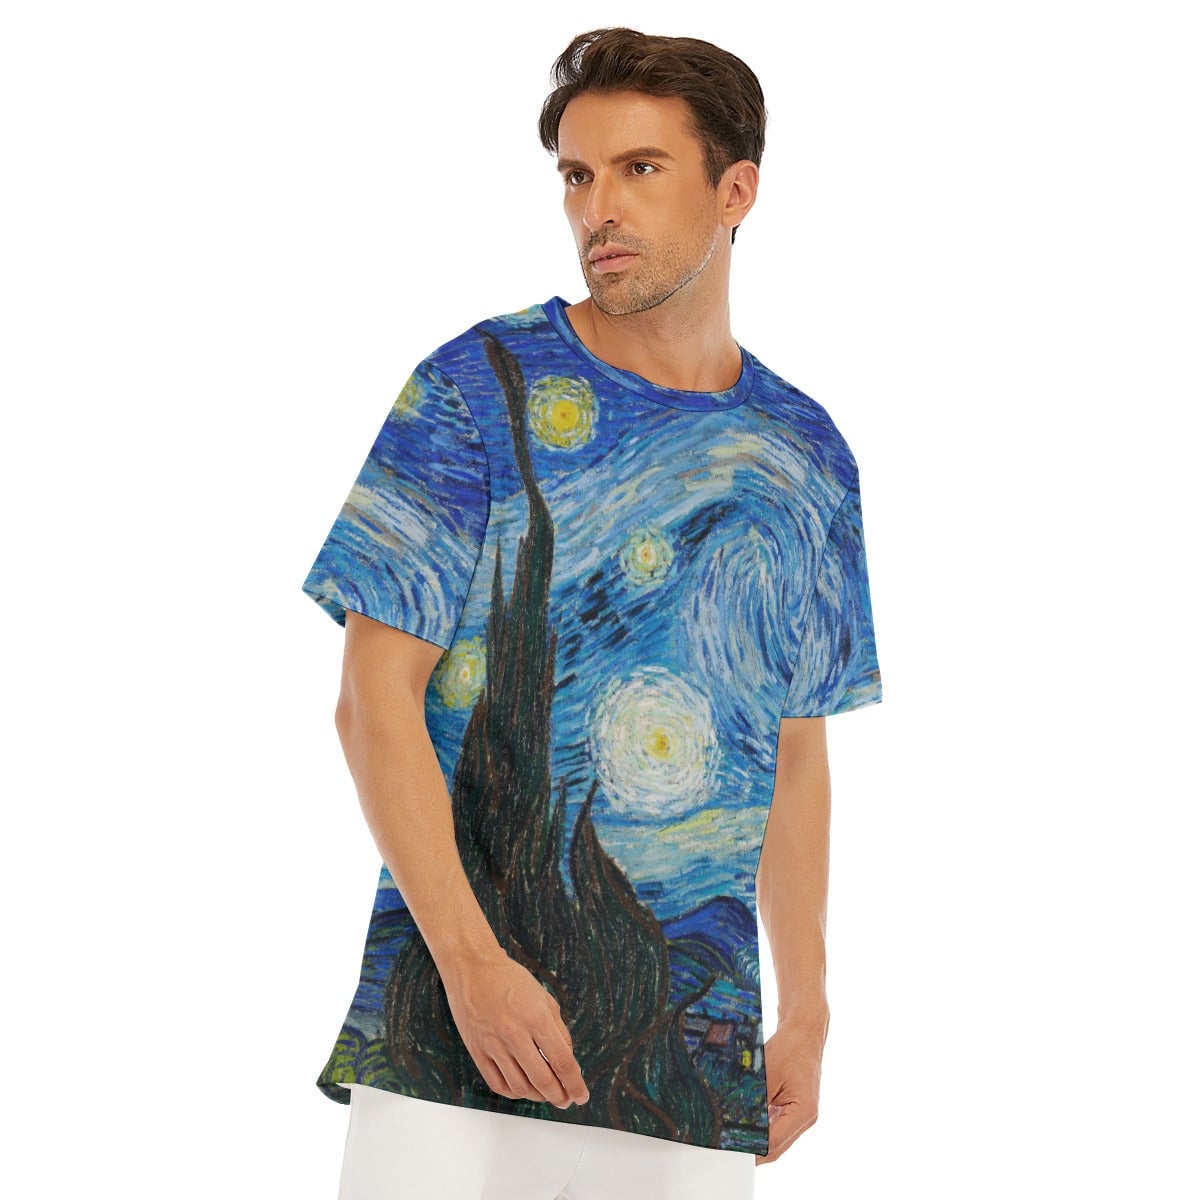 The Starry Night Van Gogh Art T-Shirt